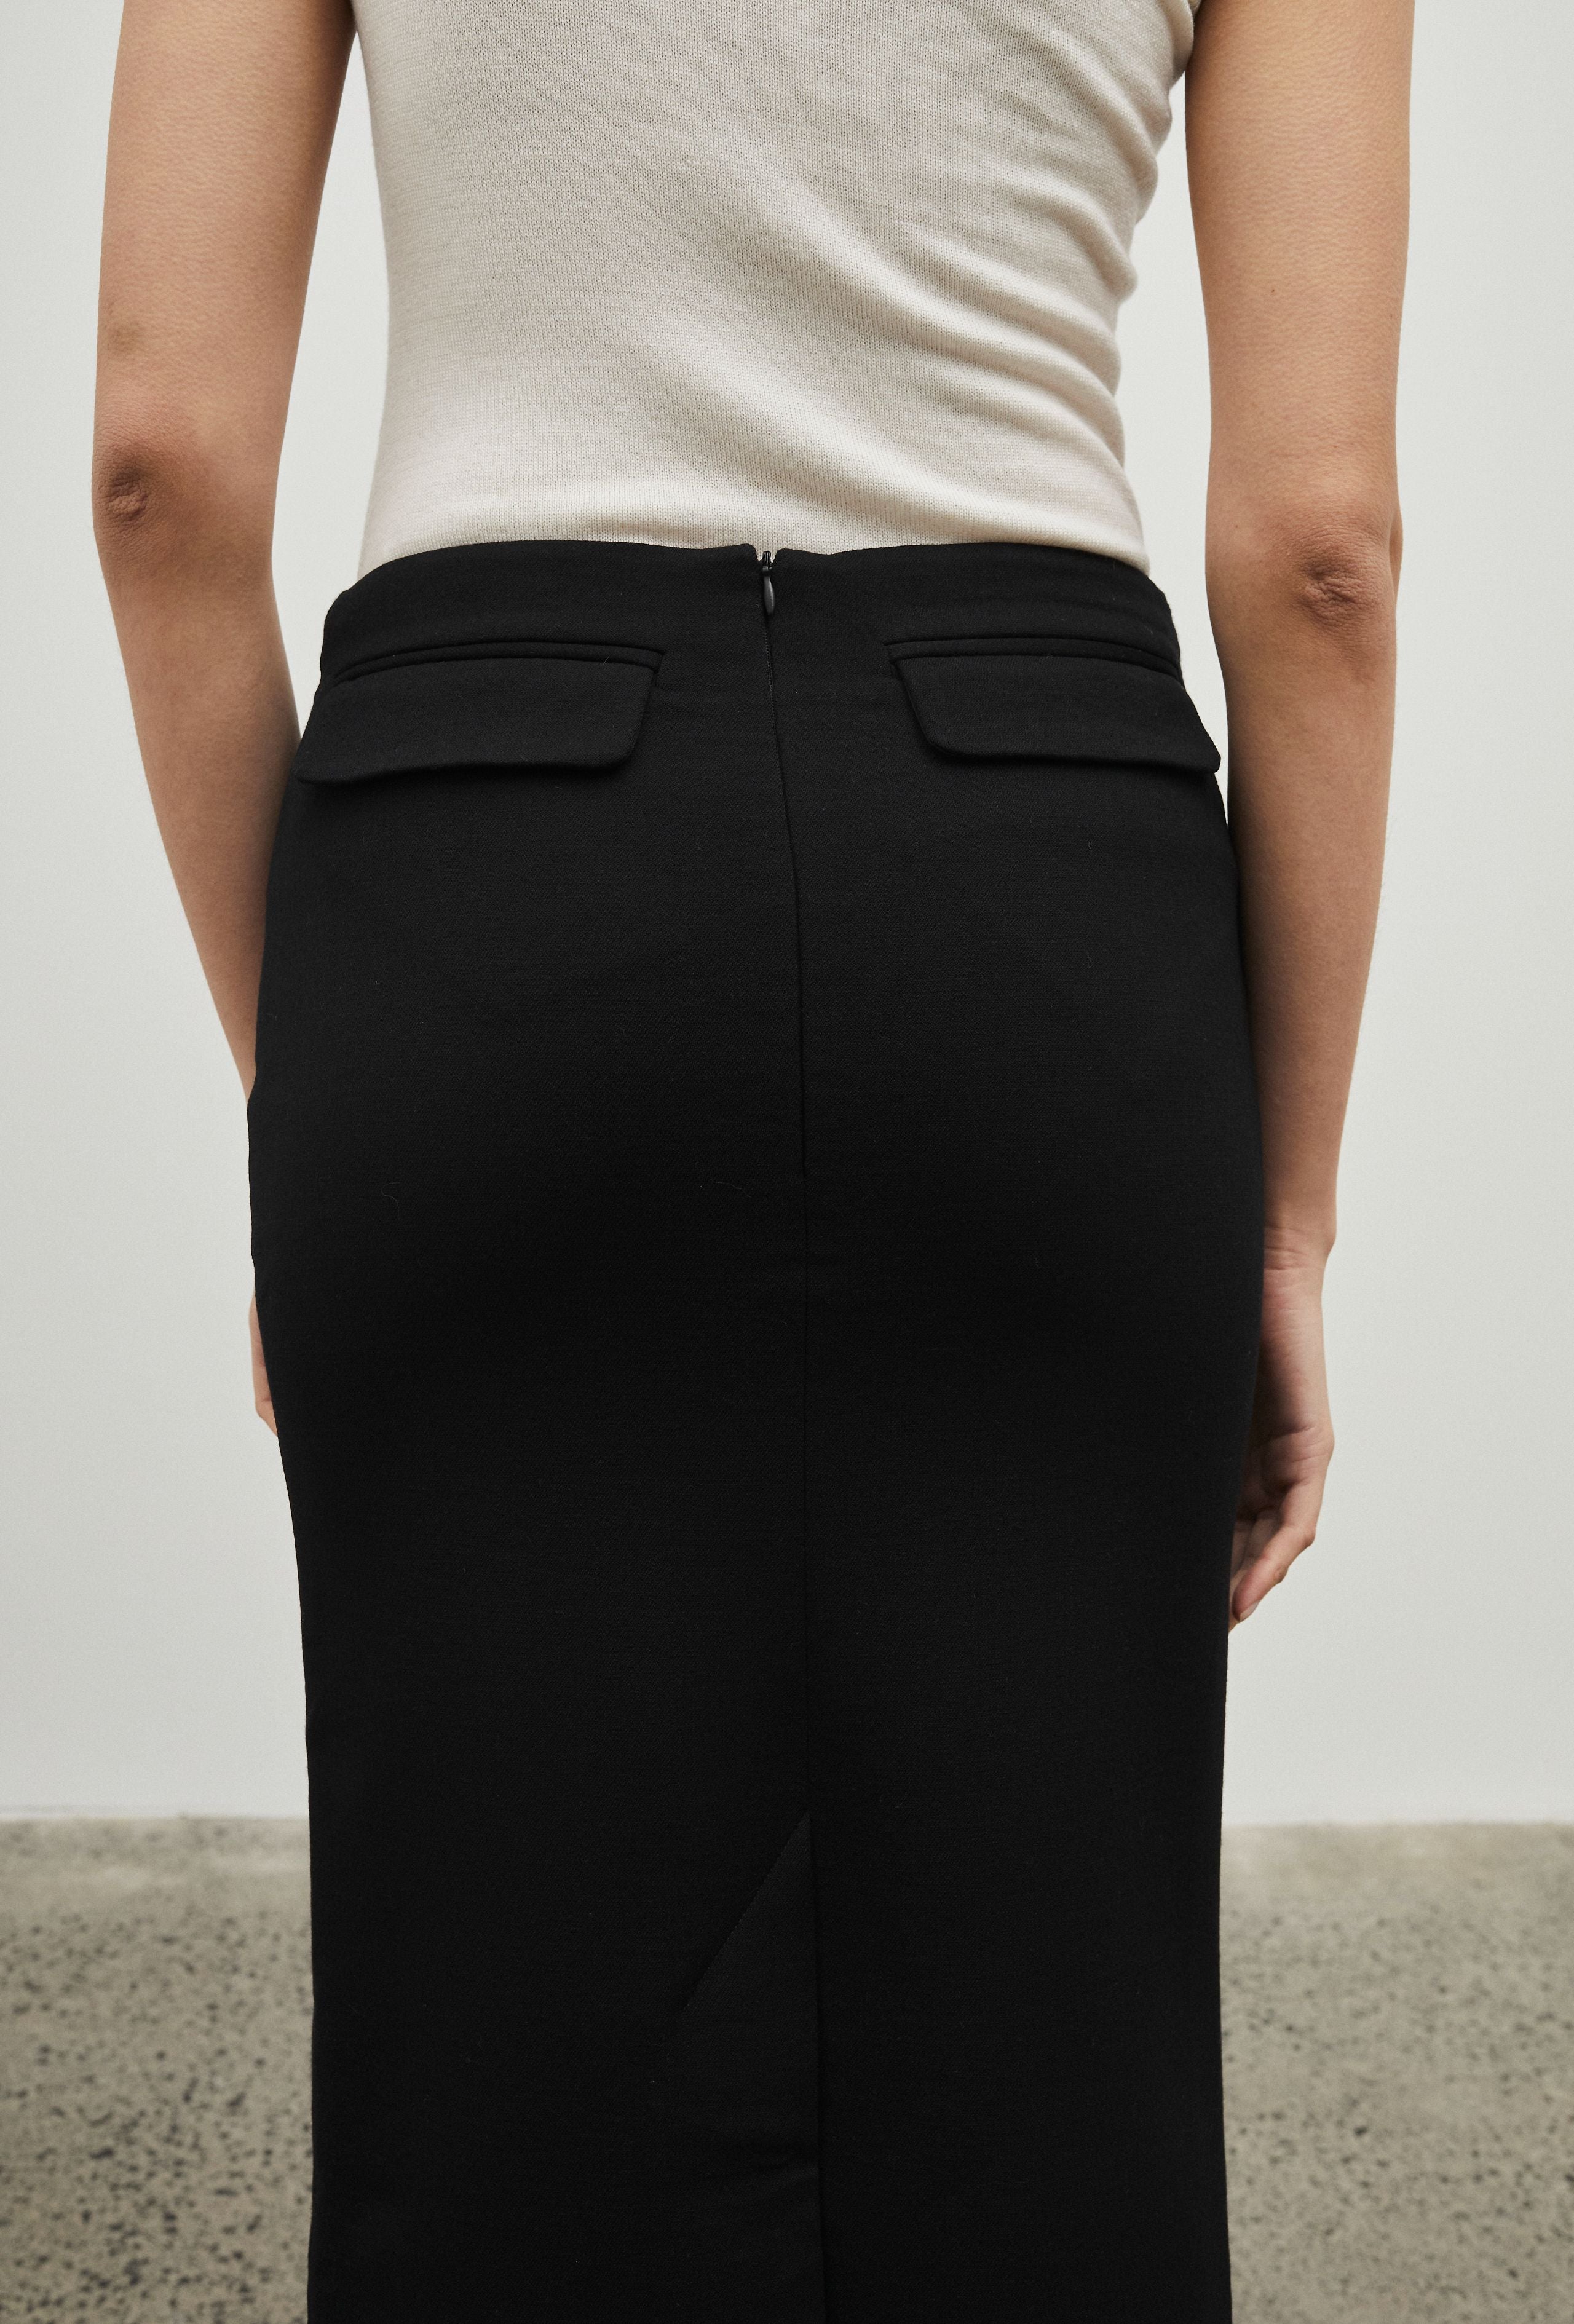 Tailored Compact Essential Button Through Midi Pencil Skirt | Karen Millen